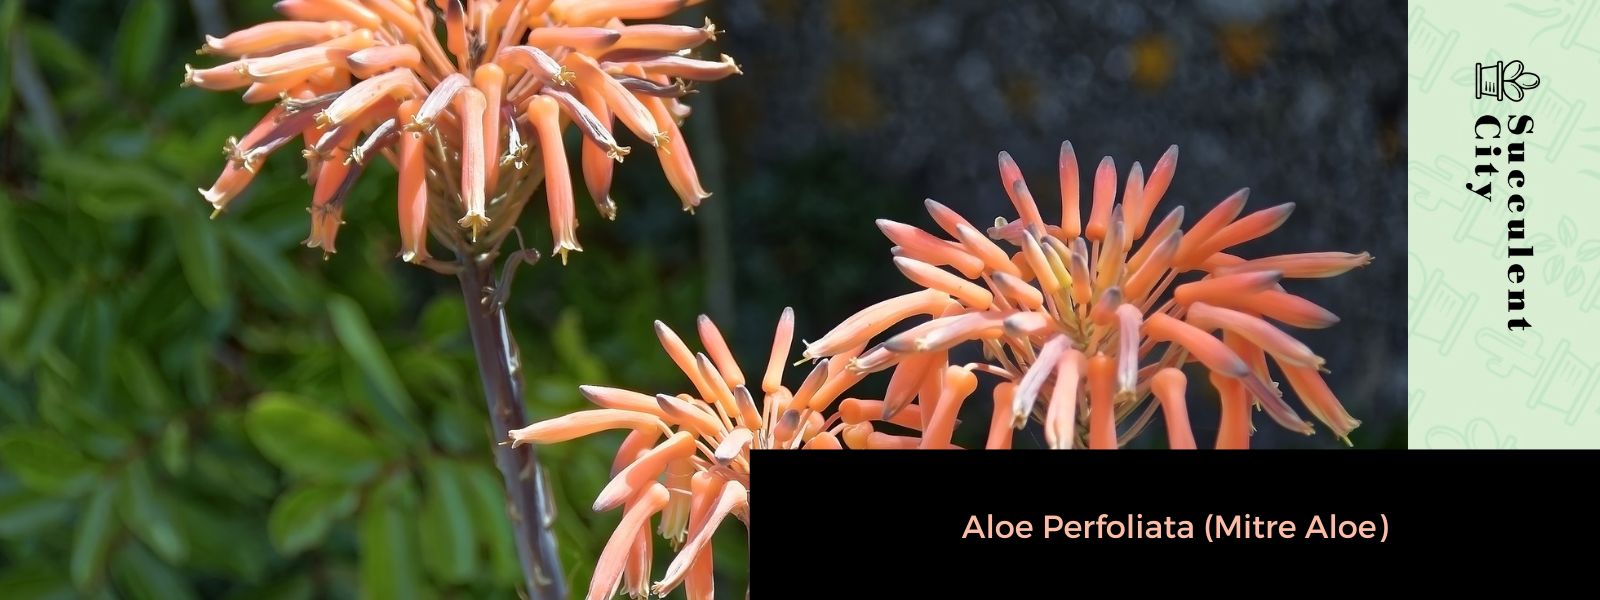 Aloe Perfoliata (Mitre Aloe)